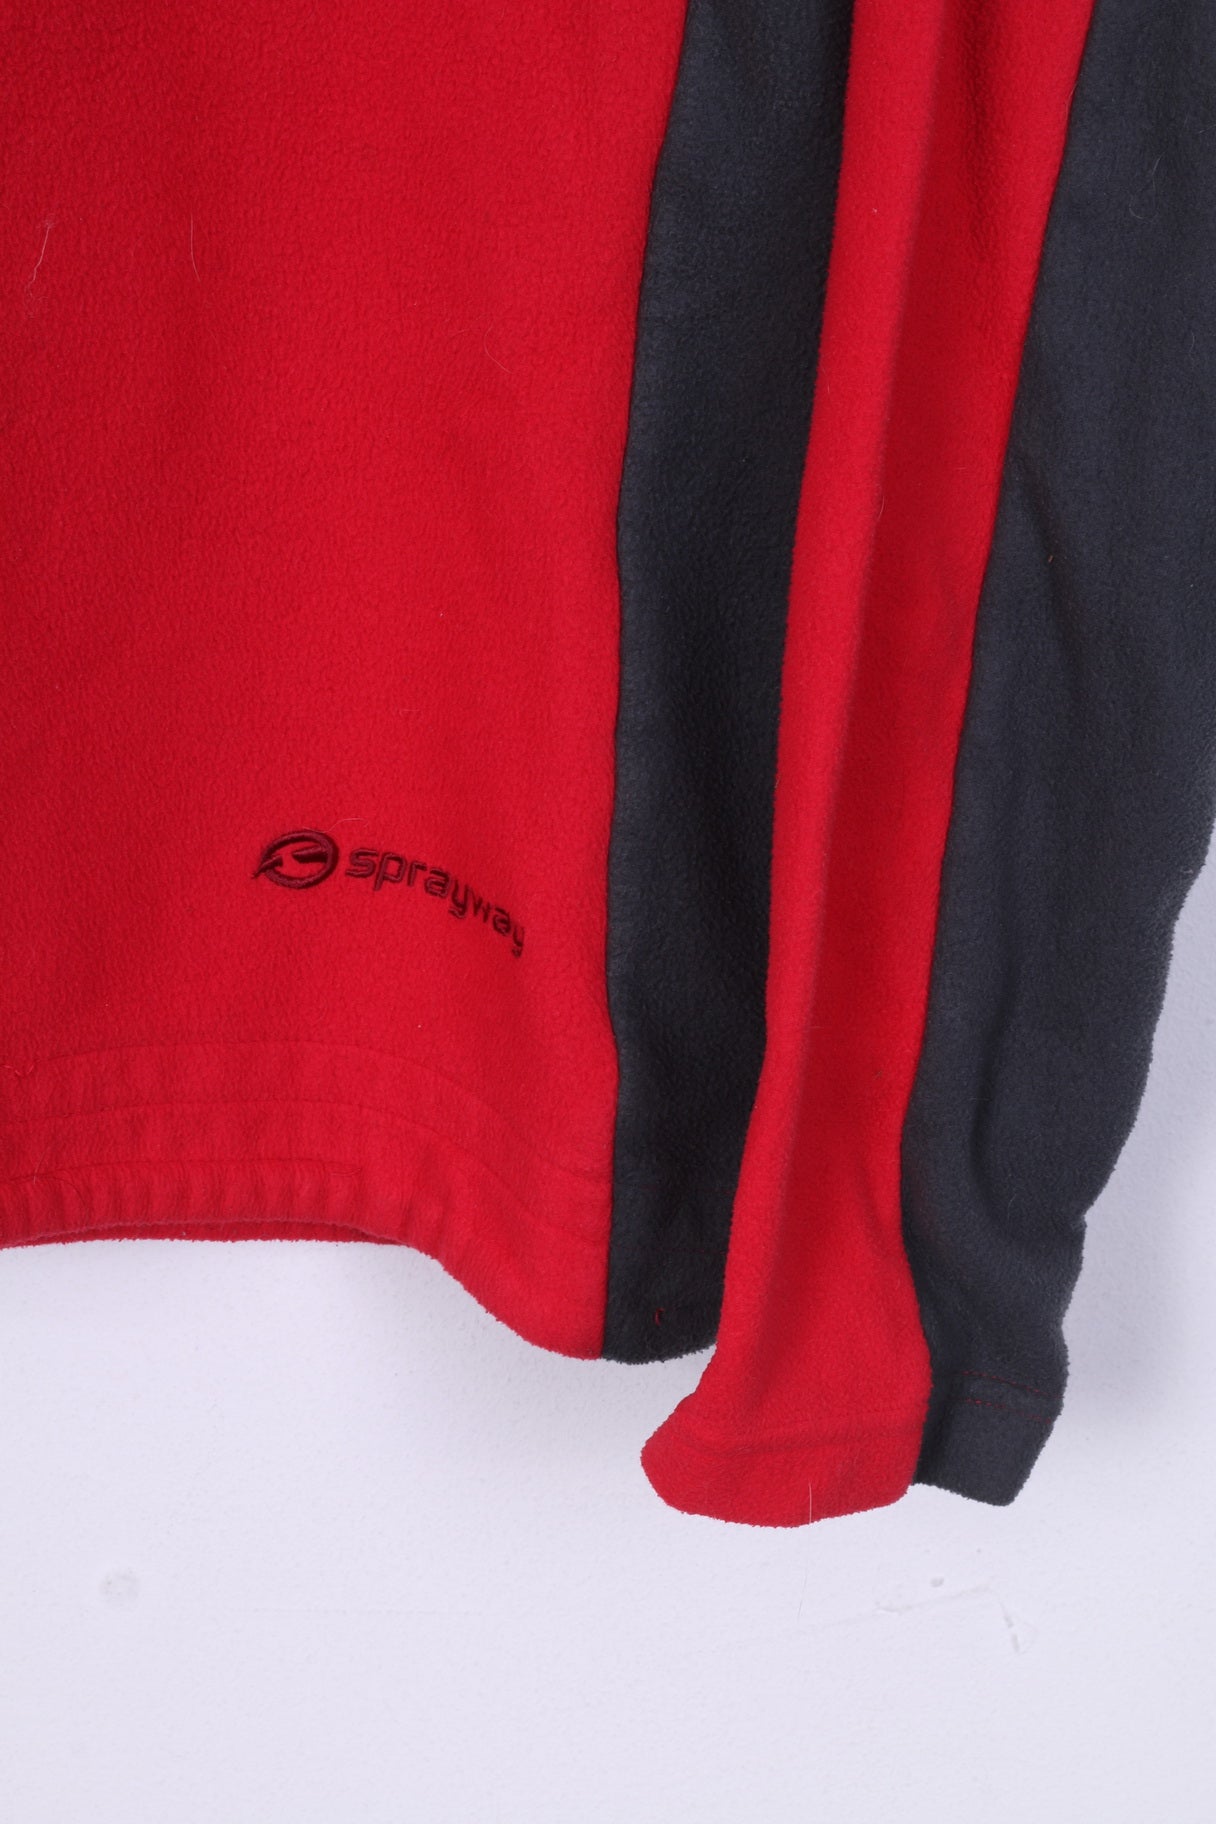 Sprayway Womens XL 16 Fleece Top Raspberry Zip Neck Sweatshirt Sportswear